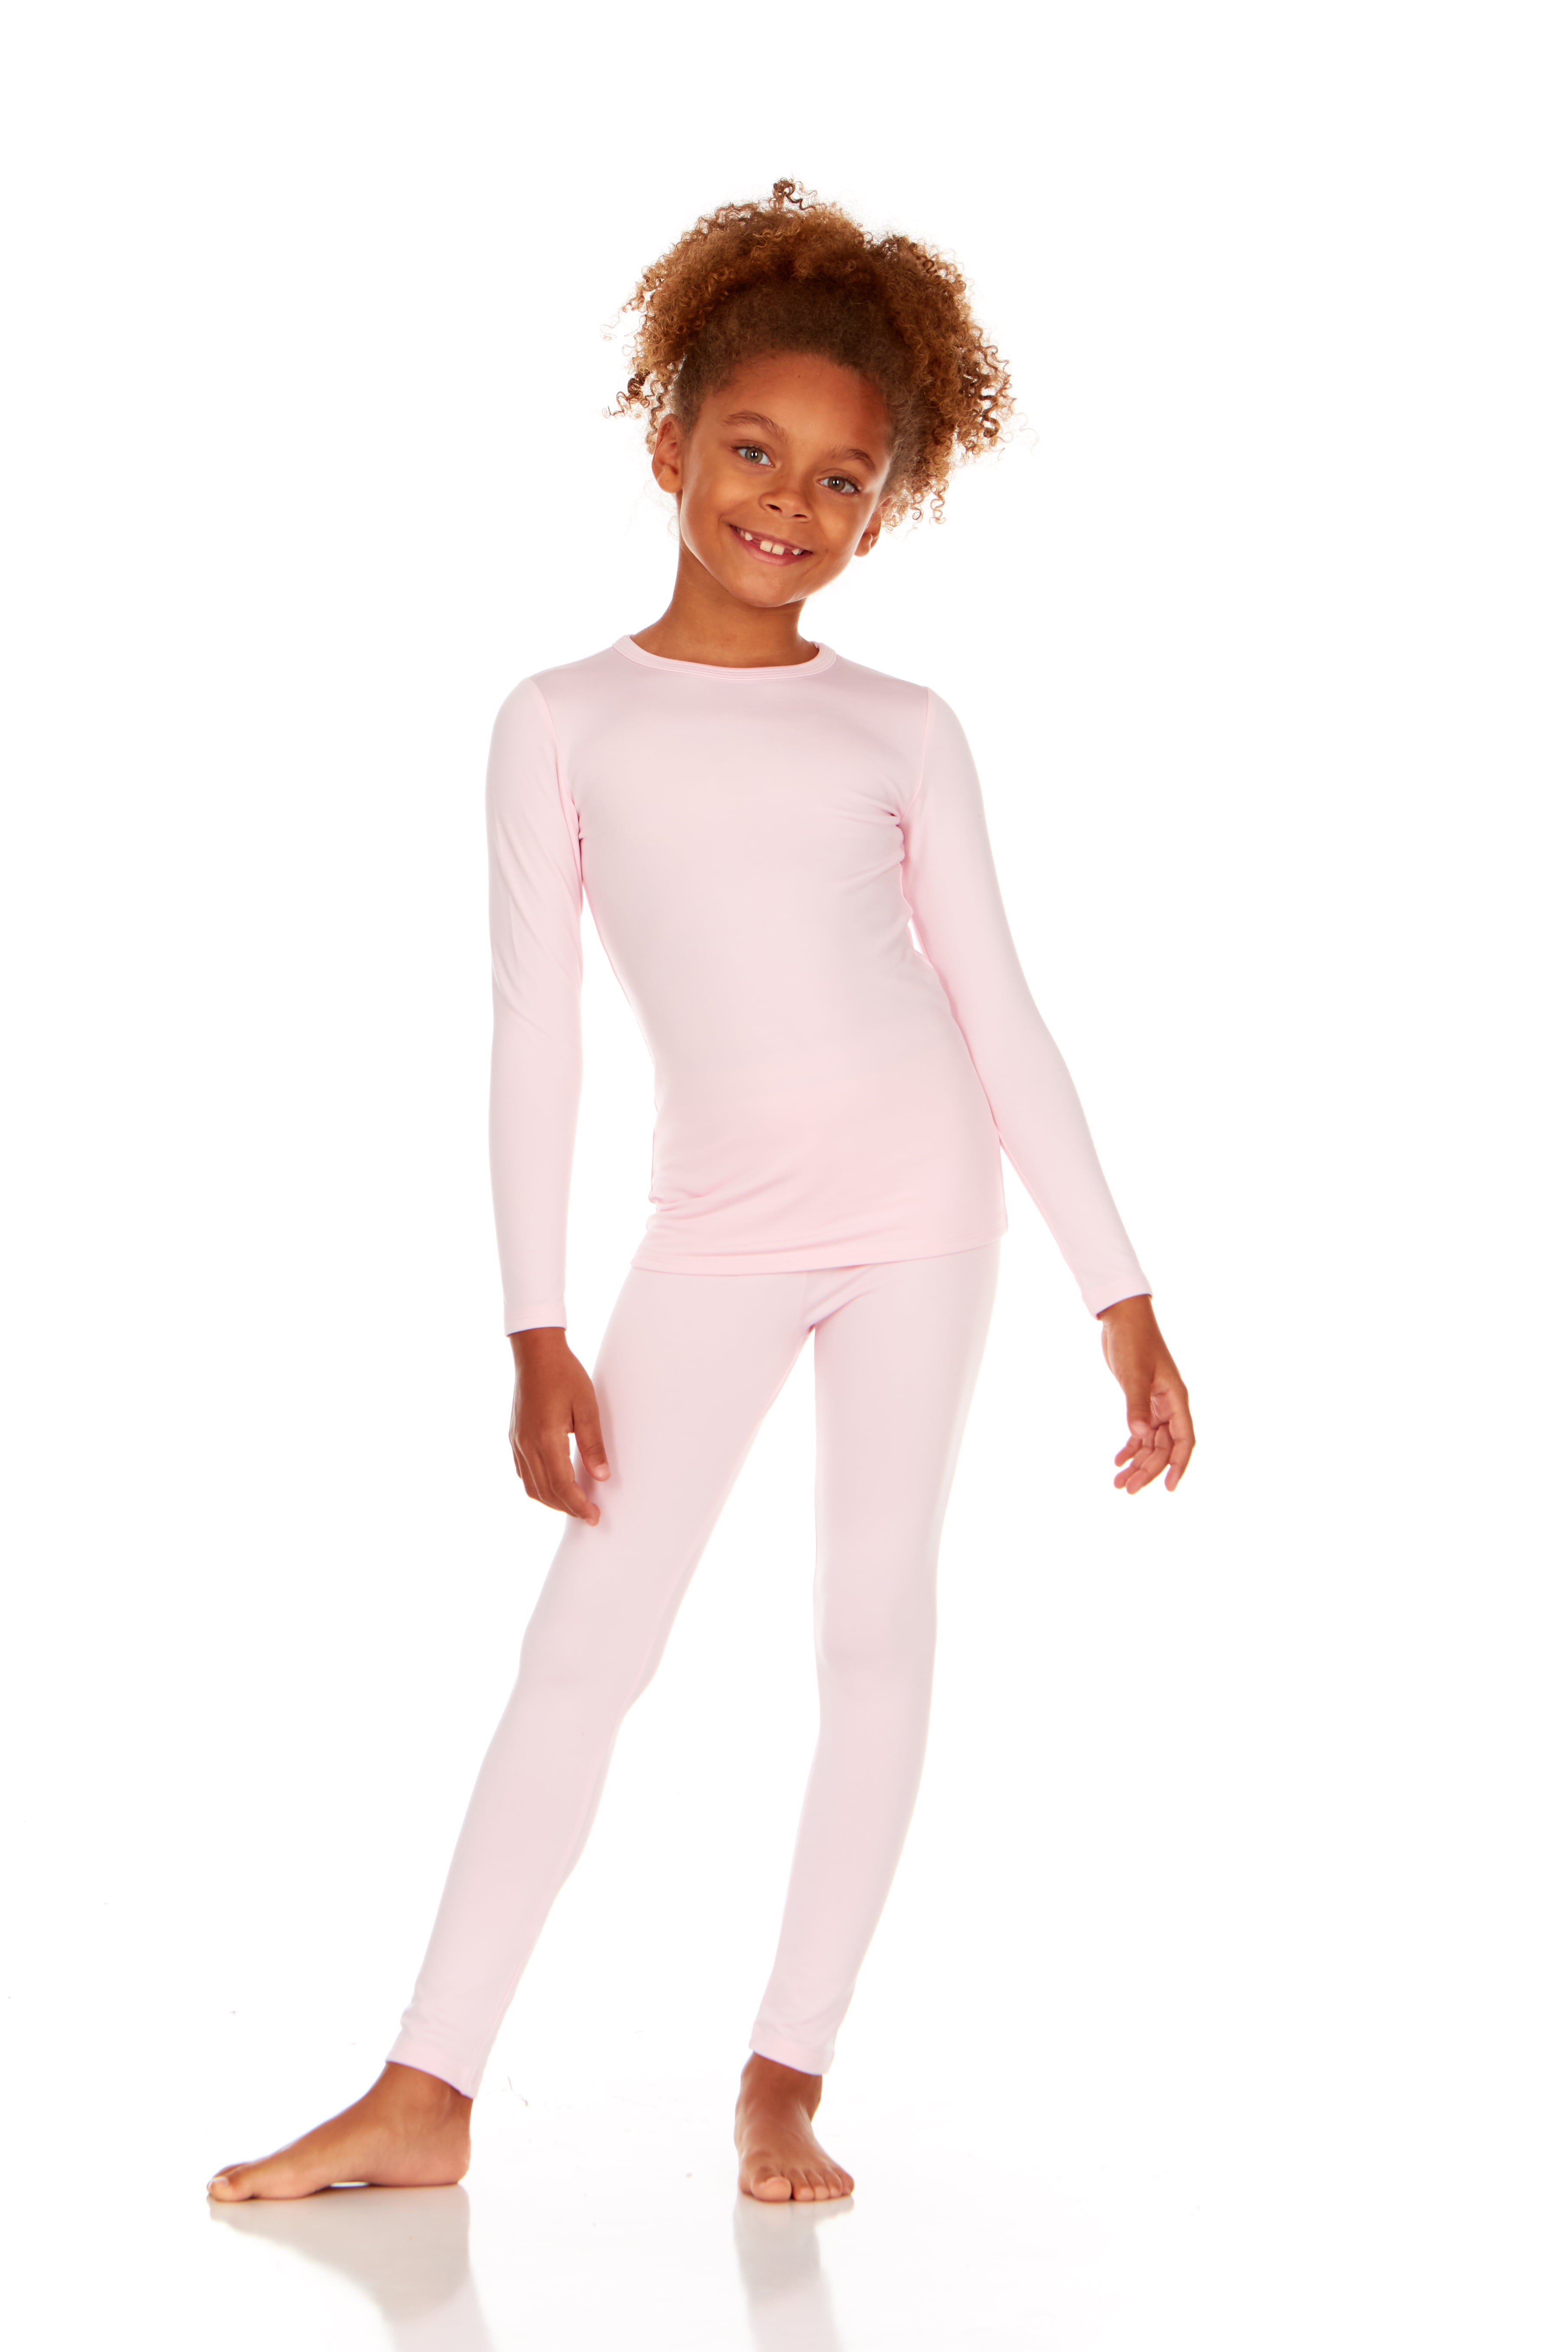 Thermajane Thermal Underwear for Girls Long John Set Kids (Black, Small) 